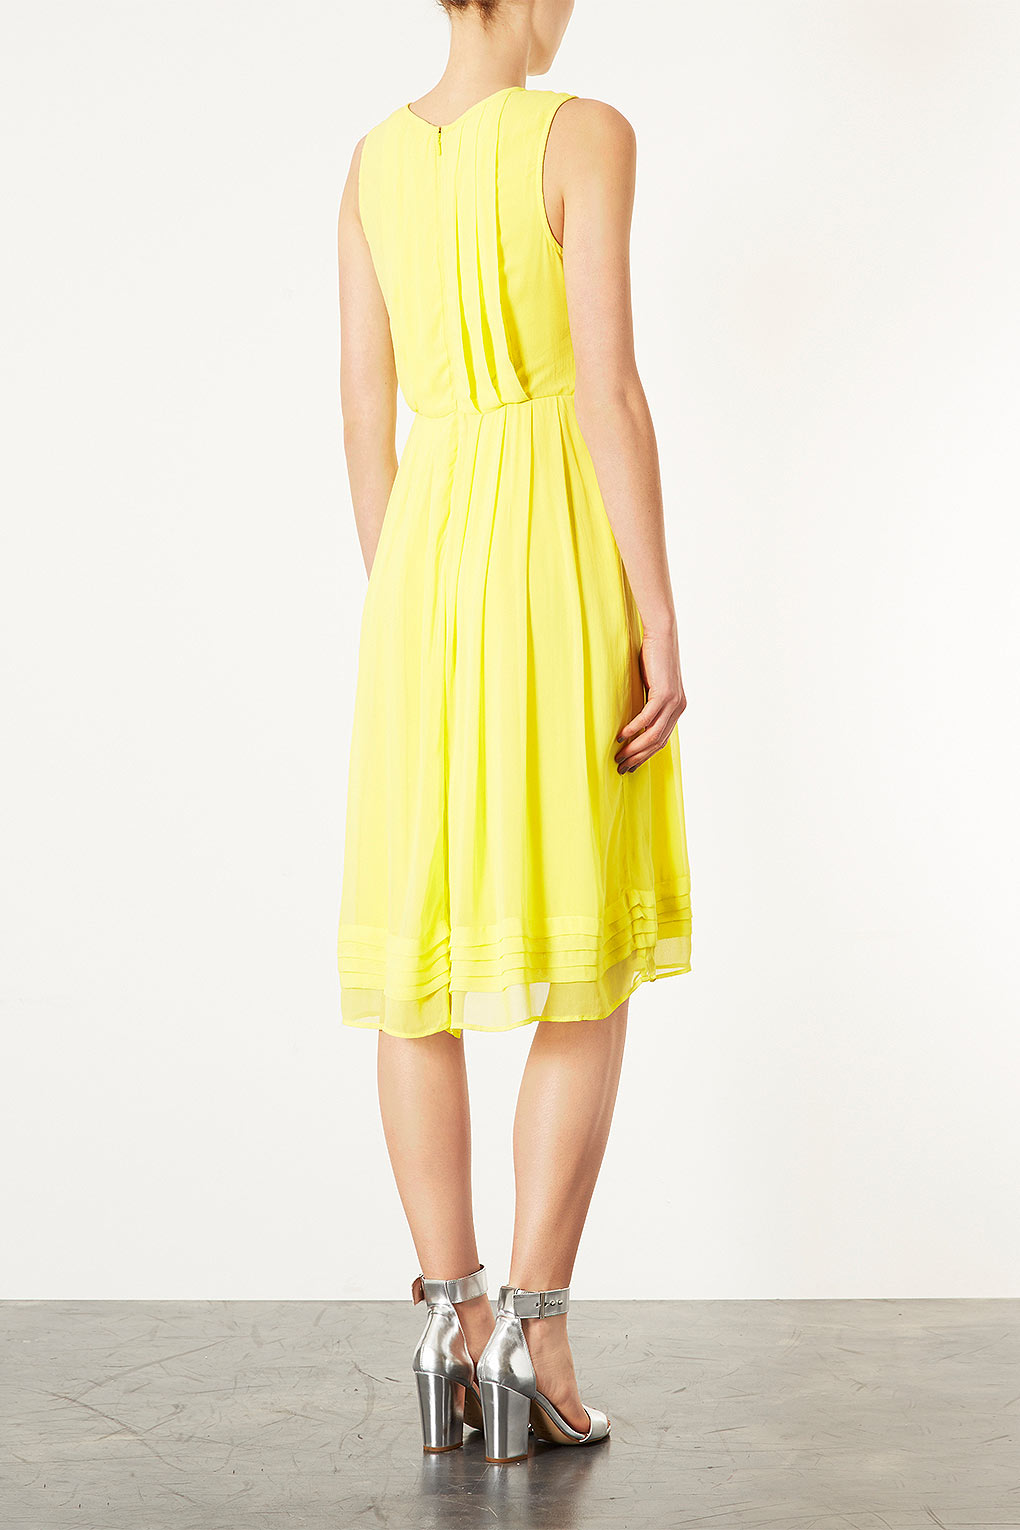 topshop yellow midi dress